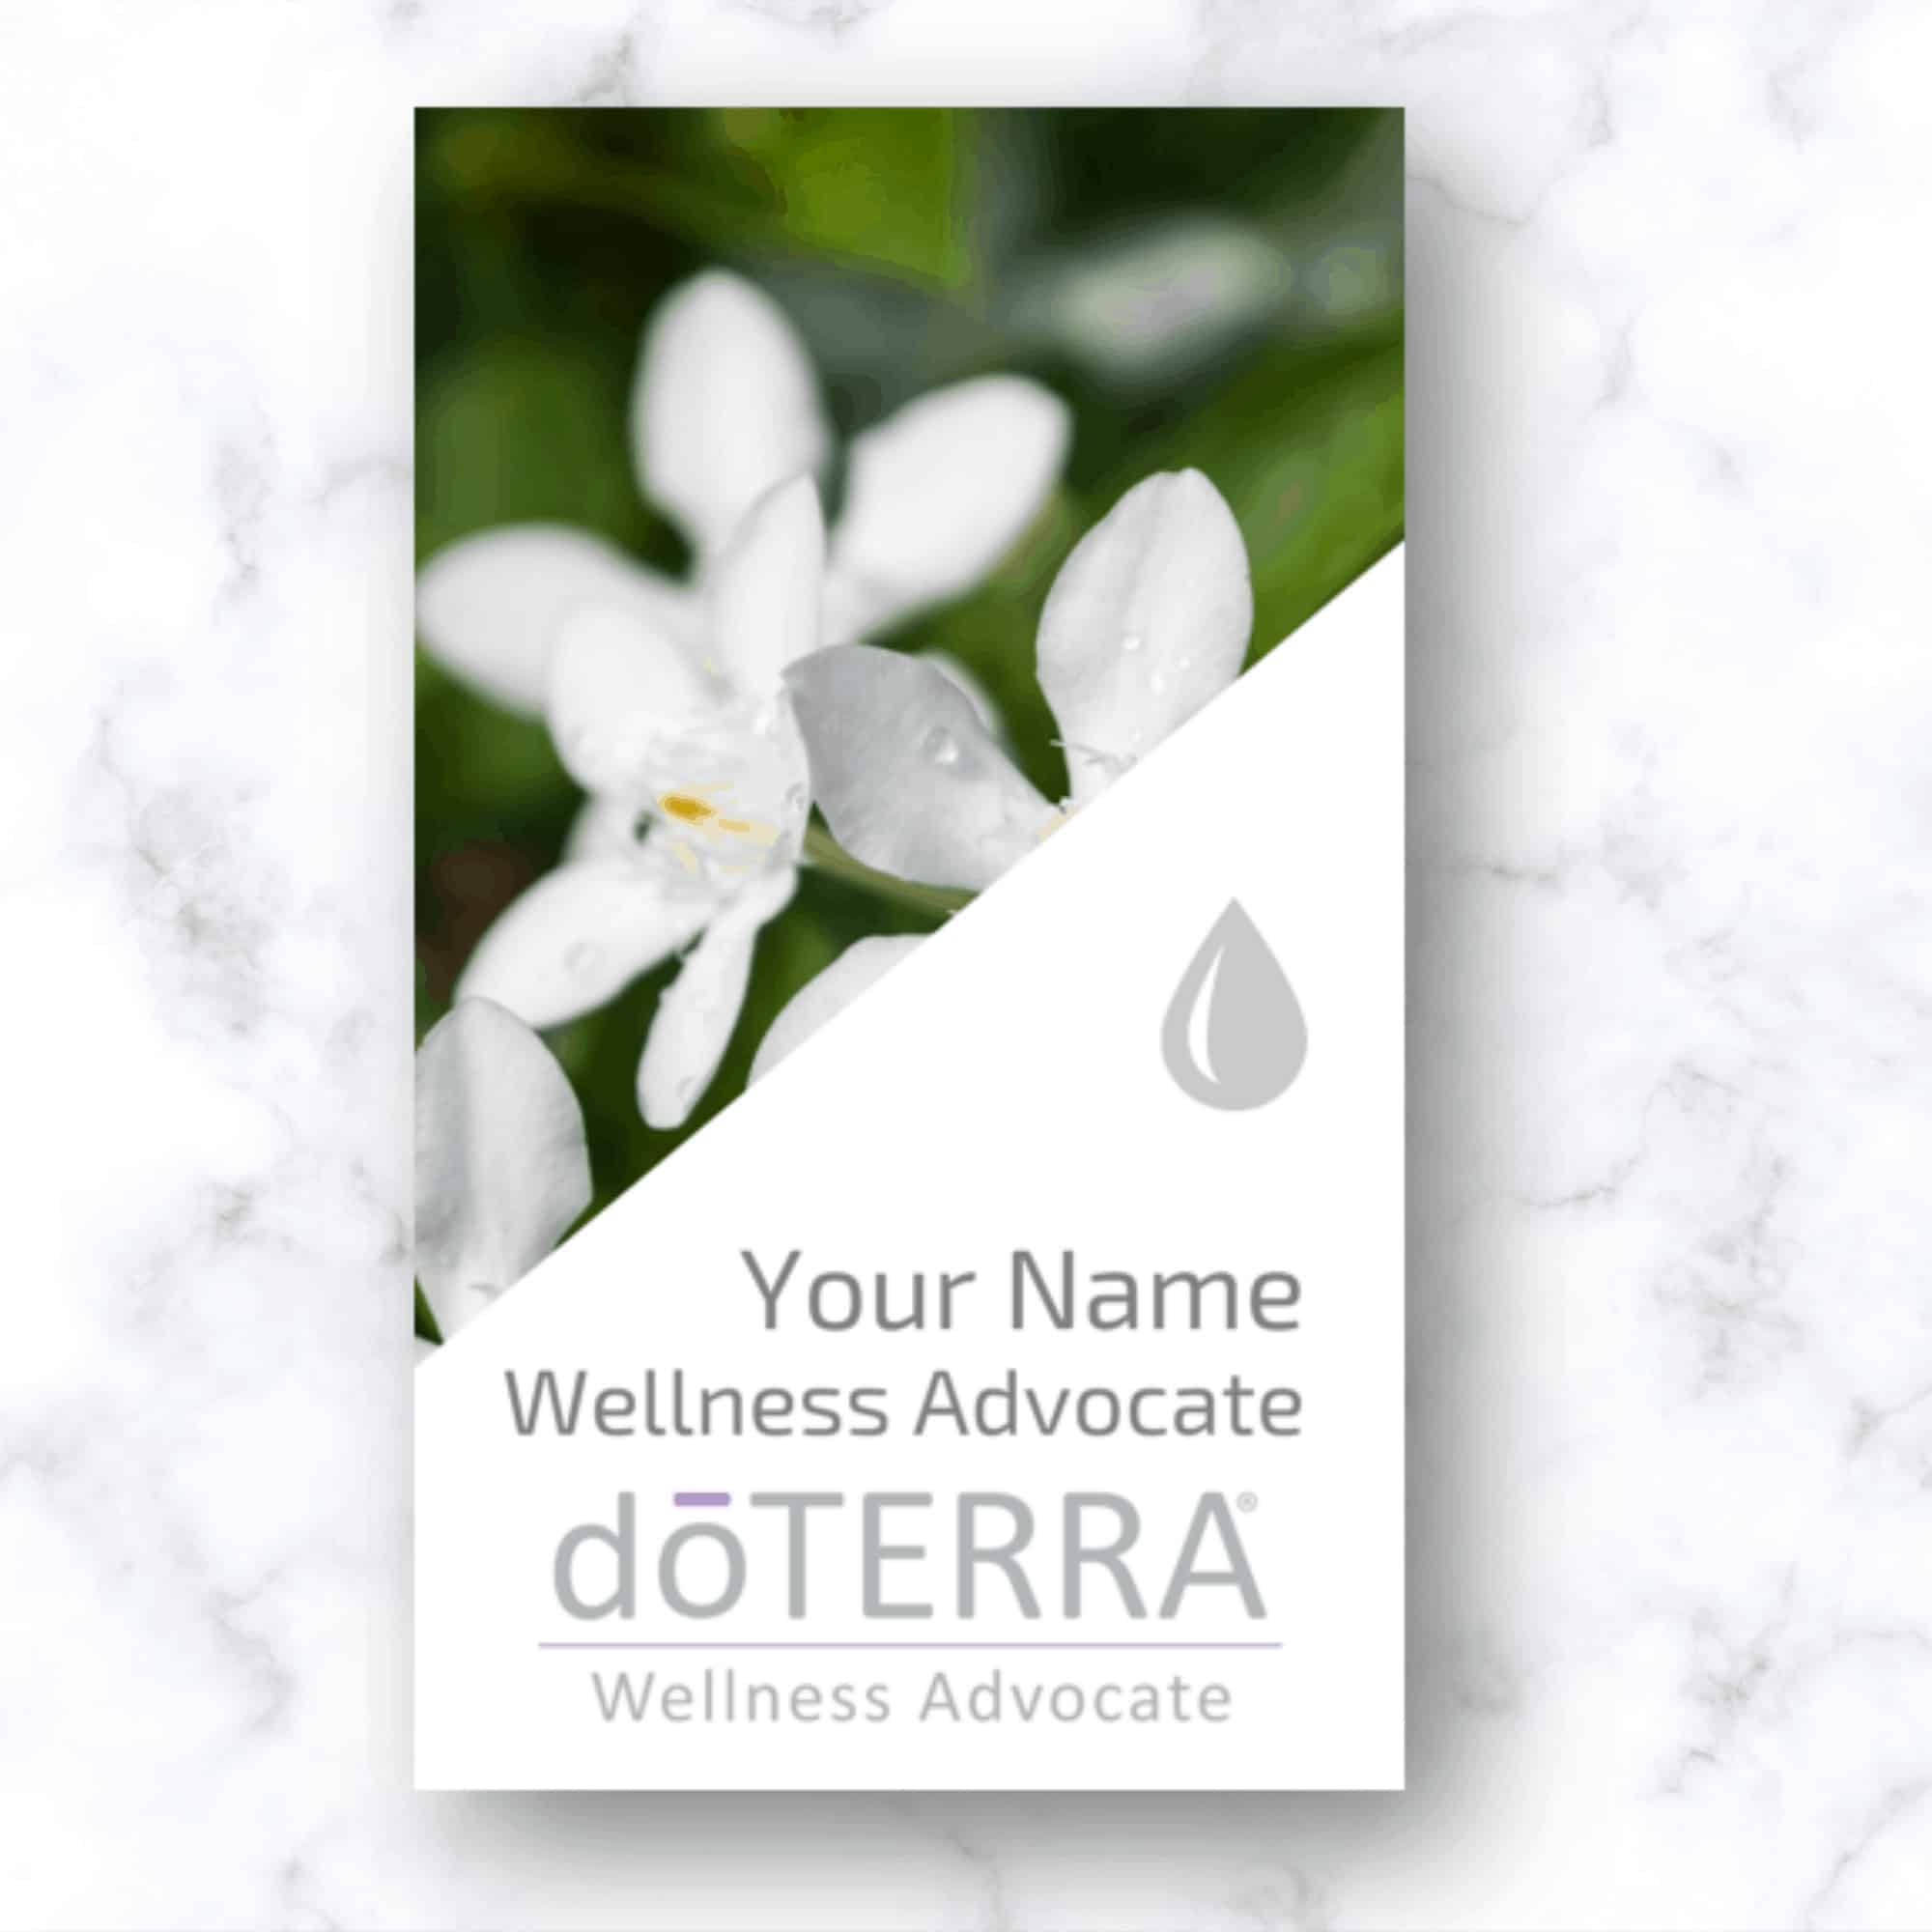 doterra wellness advocate business card with a jasmine flower. customized digital download